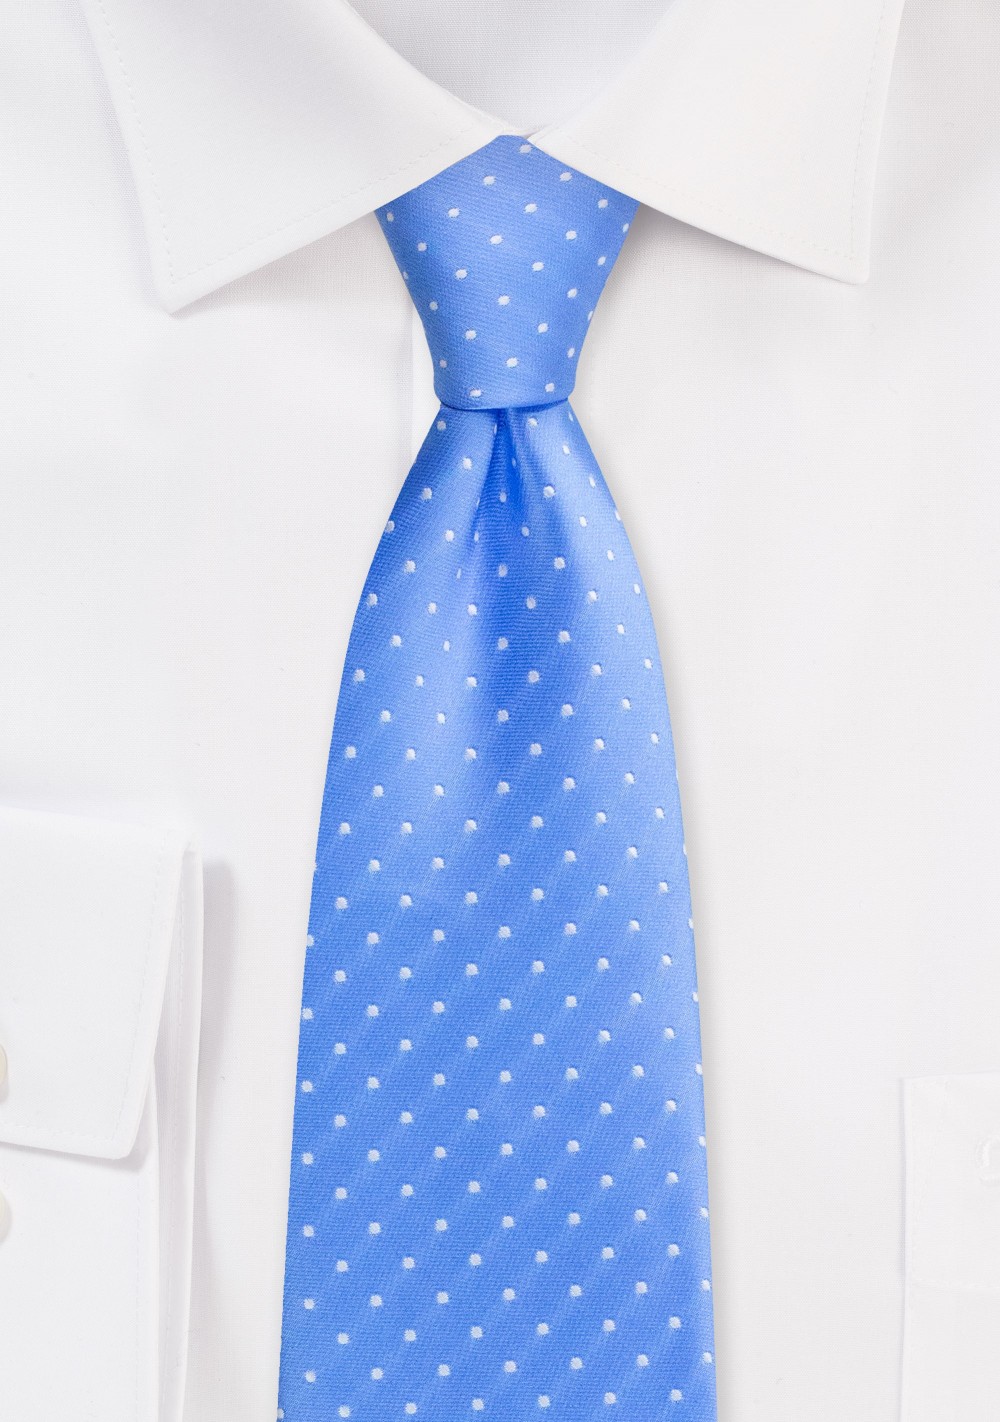 Coastal Blue Polka Dot Tie in XL Length